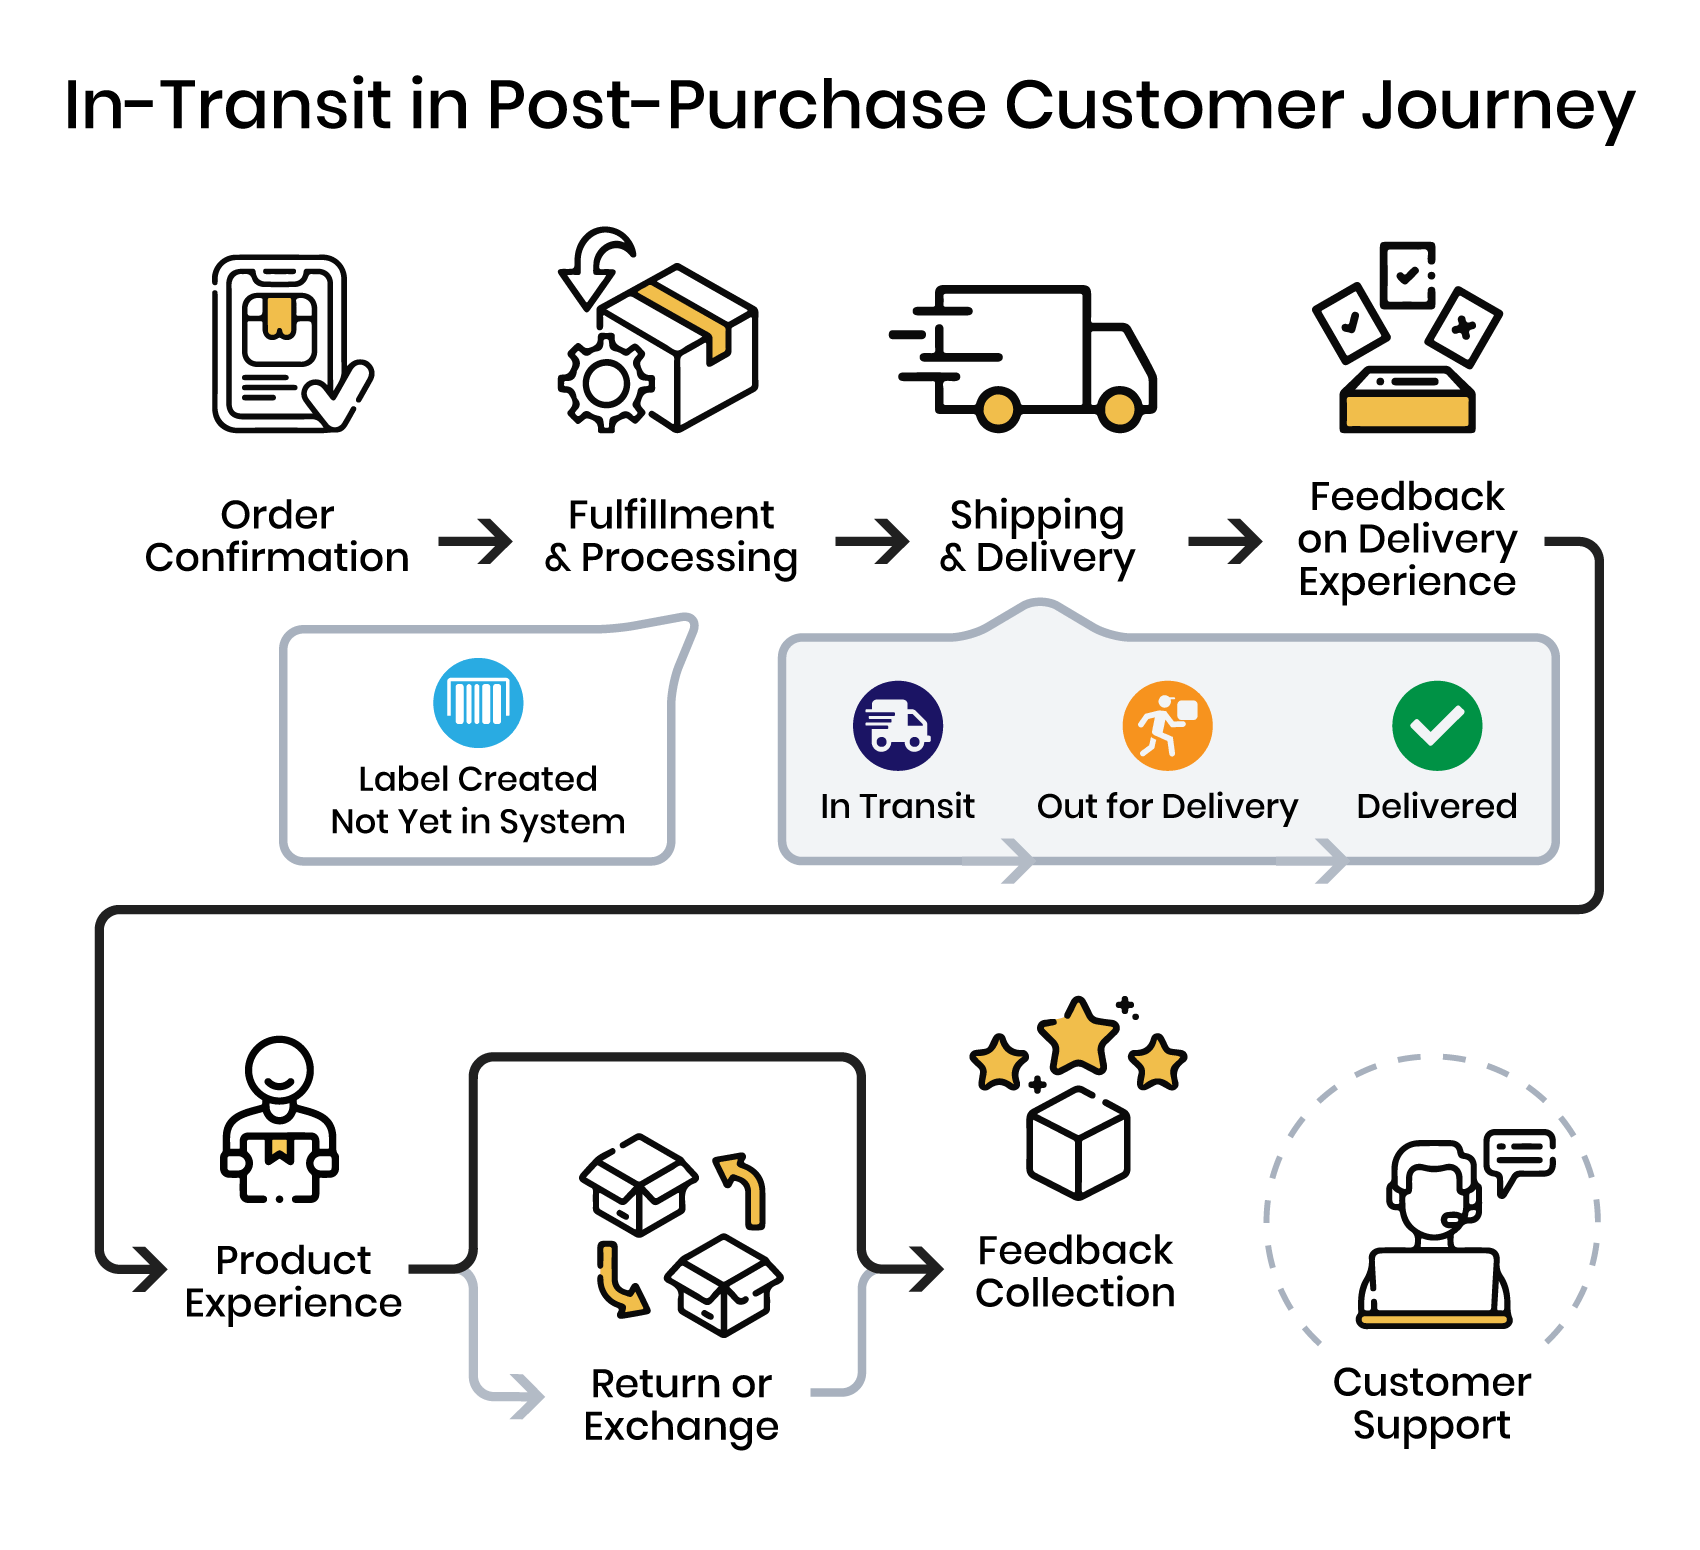 In transit in post-purchase customer journey